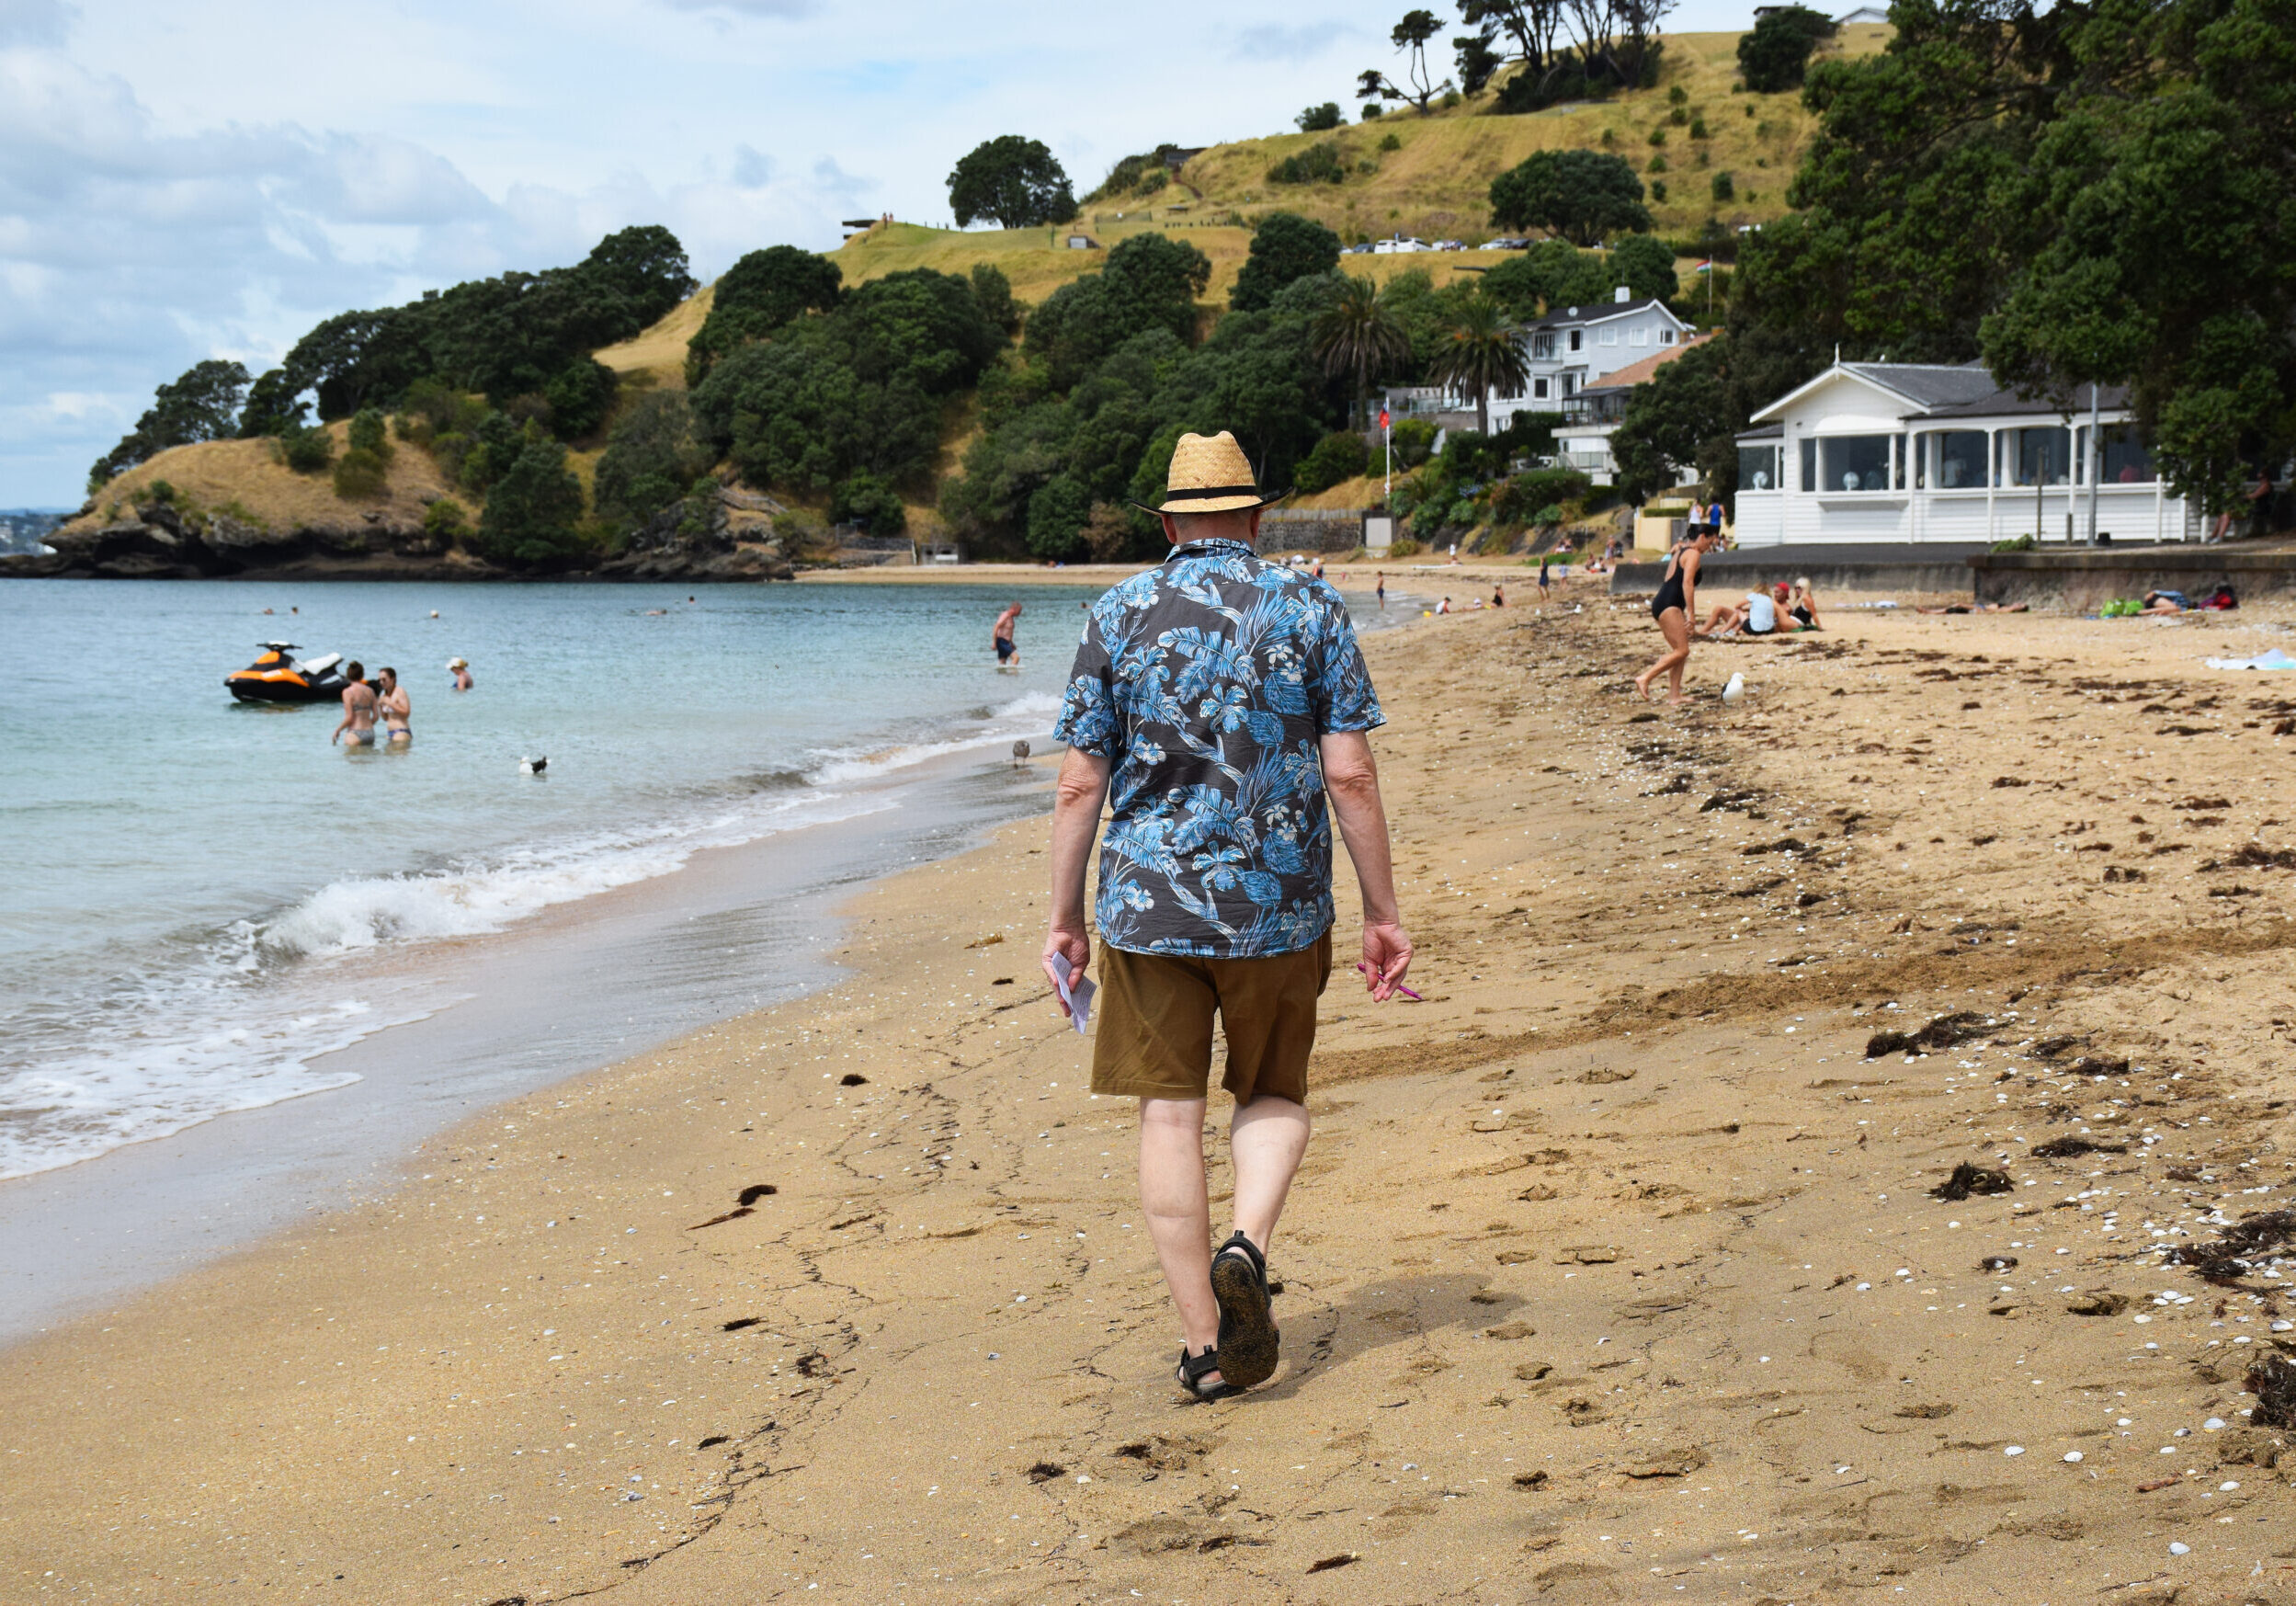 Old man walking away down the beach